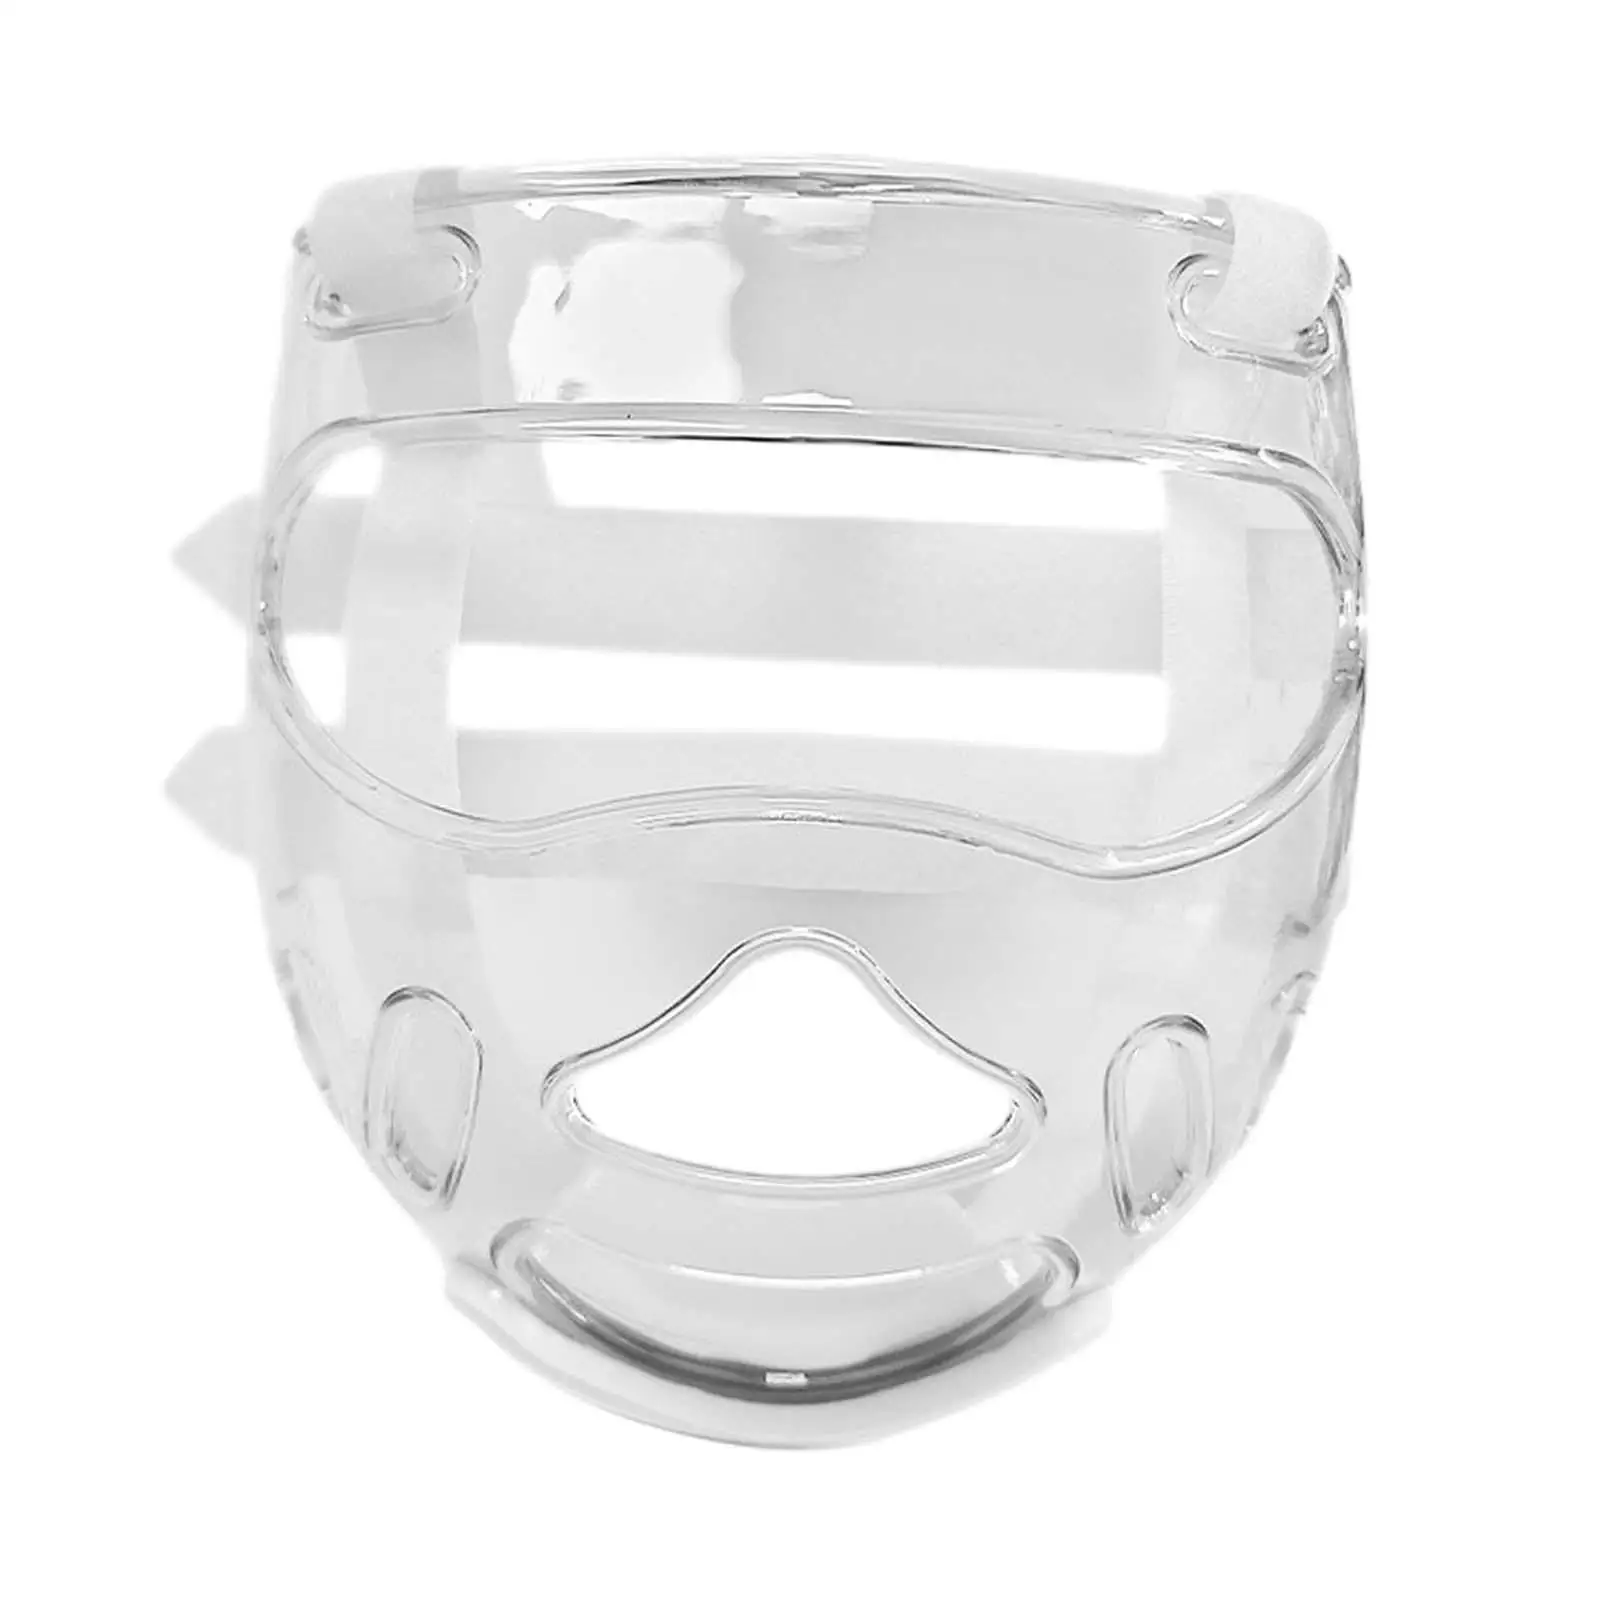 Taekwondo Face Mask Taekwondo Face Shield Protective Gear Removable Sparring Mask for Kickboxing Muay Thai Fighting Karate Boxin